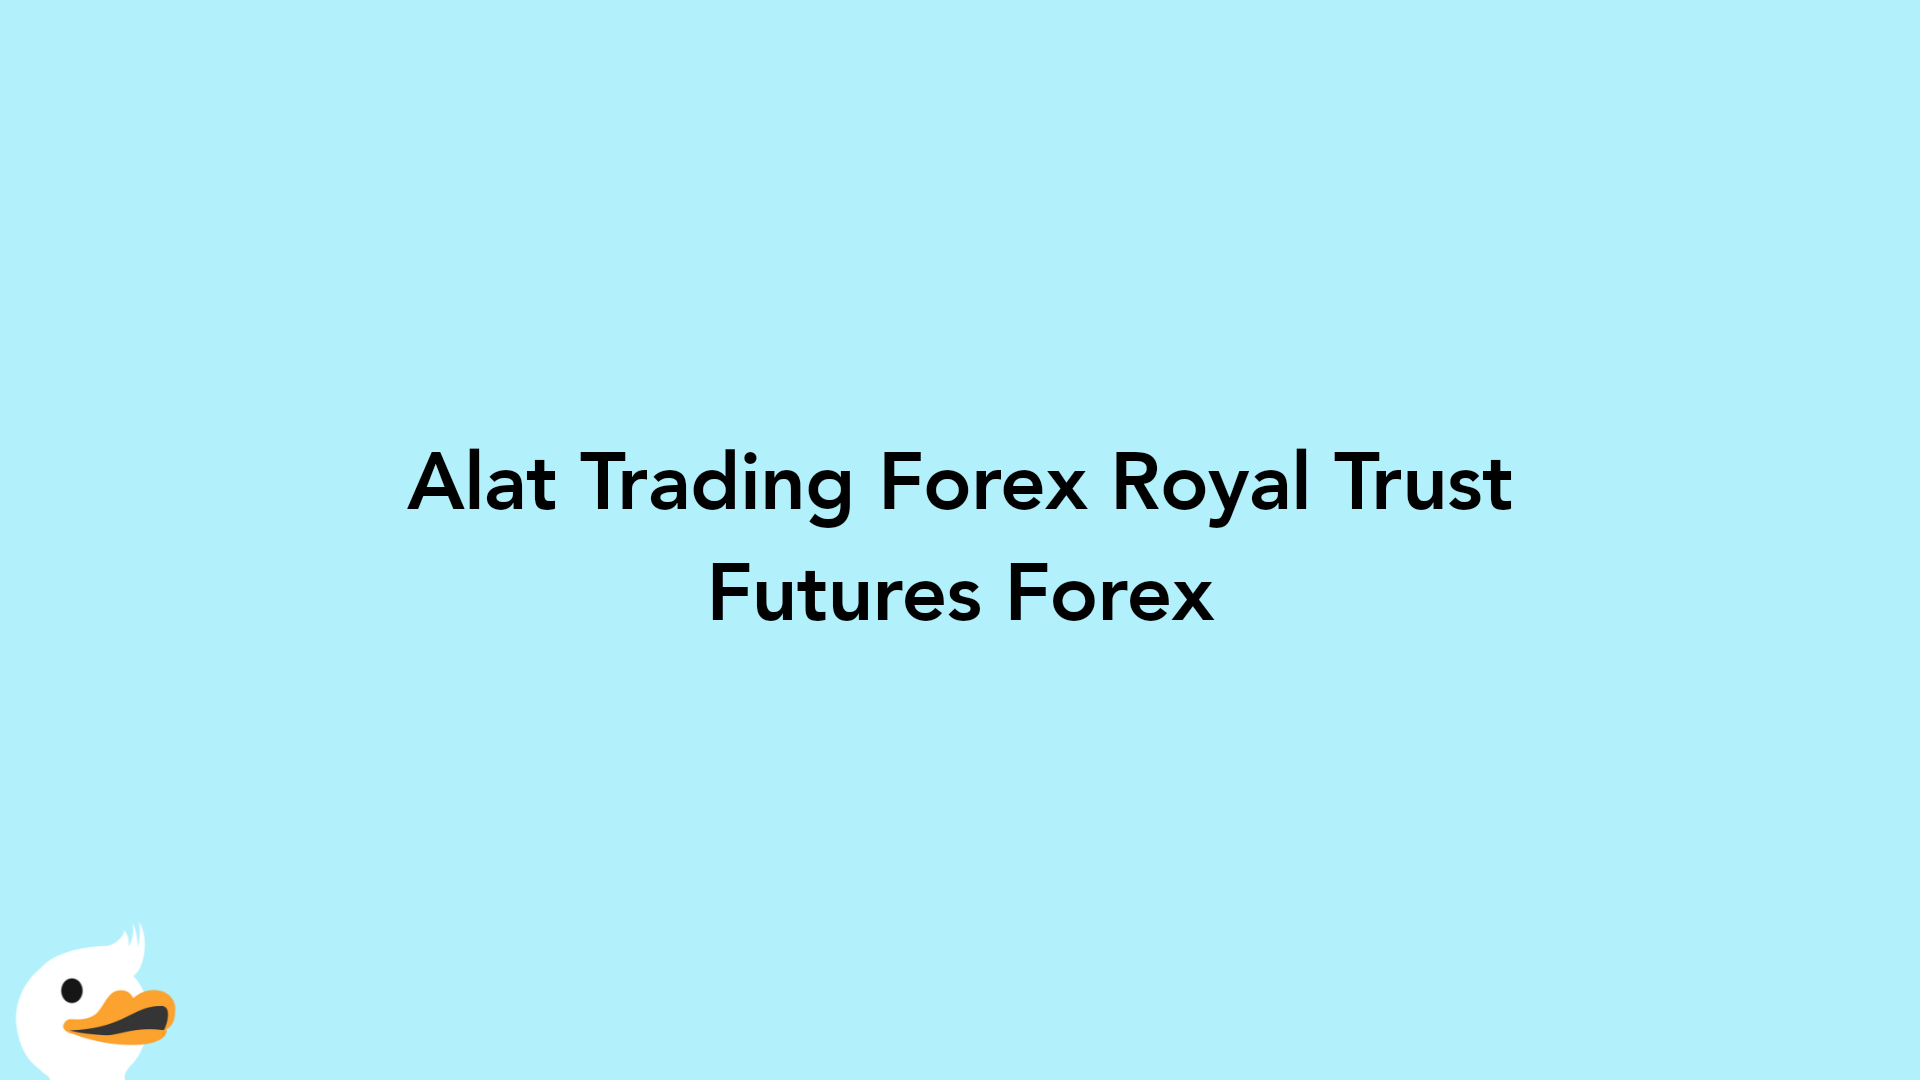 Alat Trading Forex Royal Trust Futures Forex